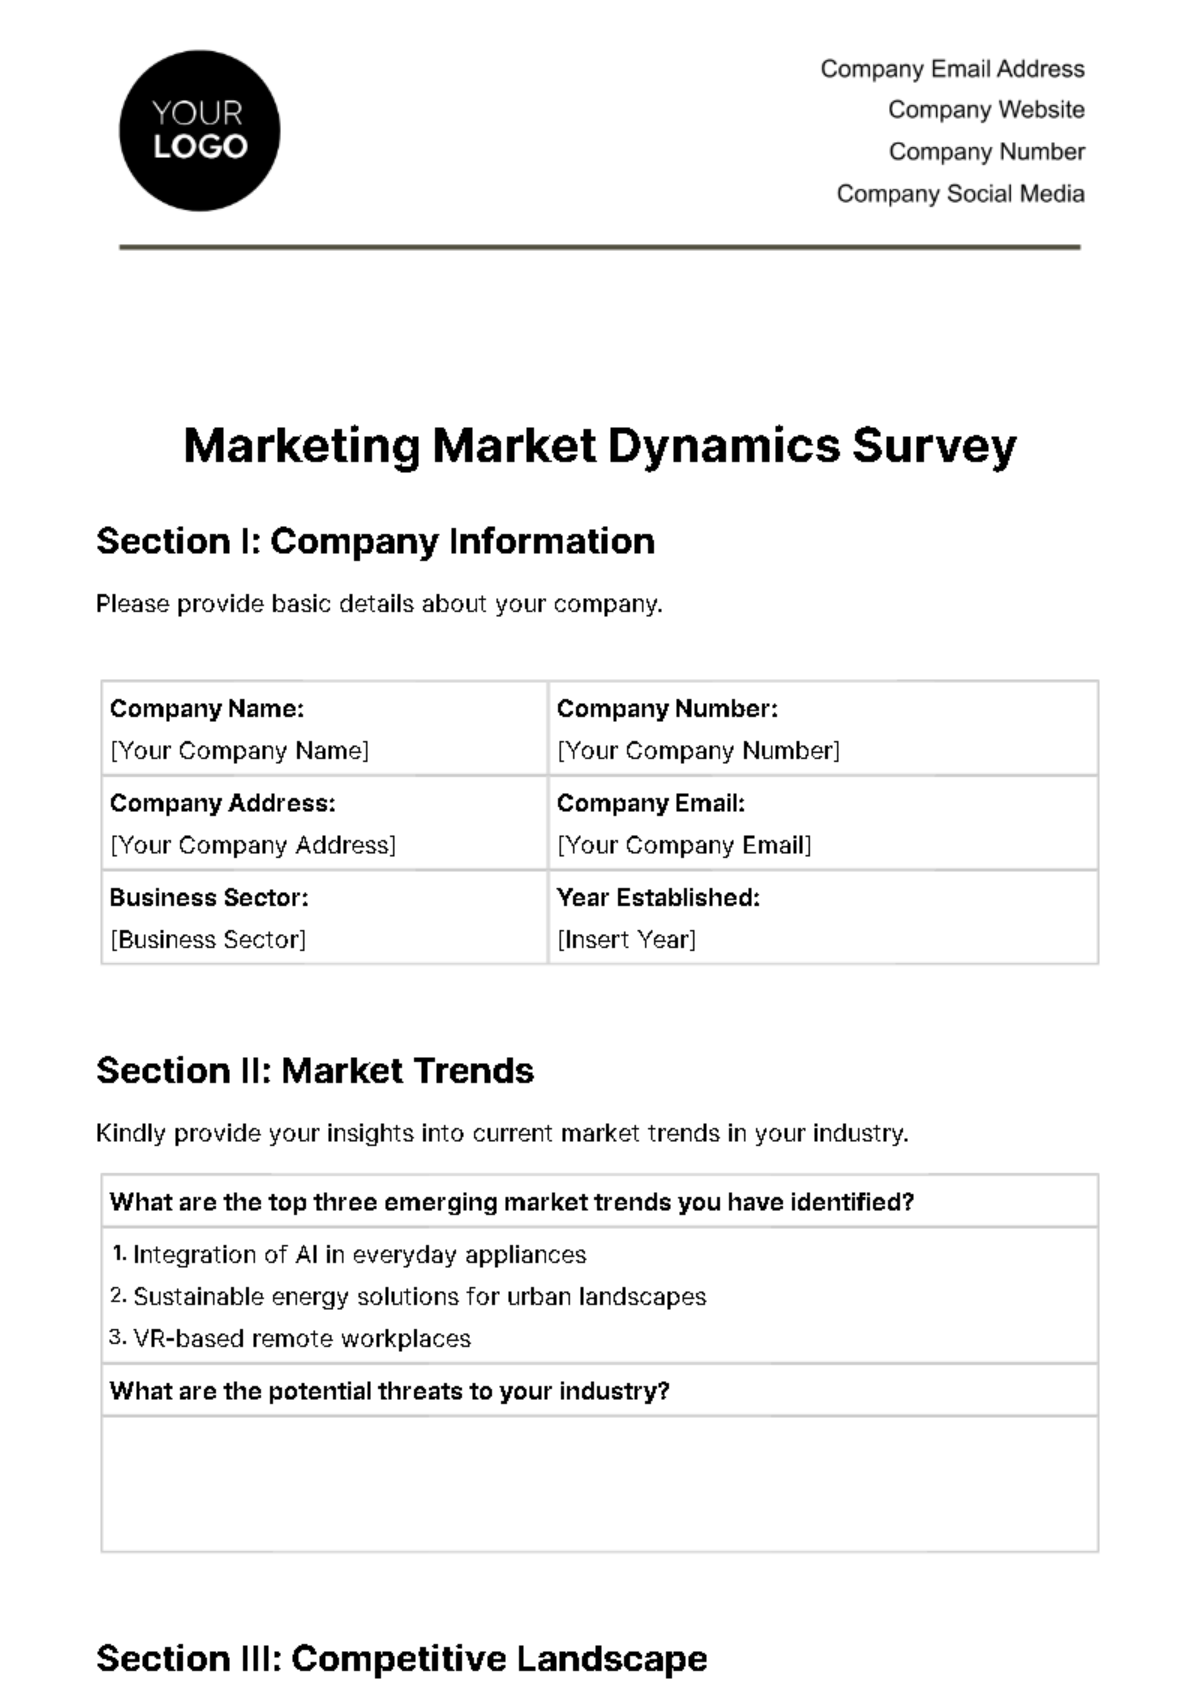 Free Marketing Market Dynamics Survey Template